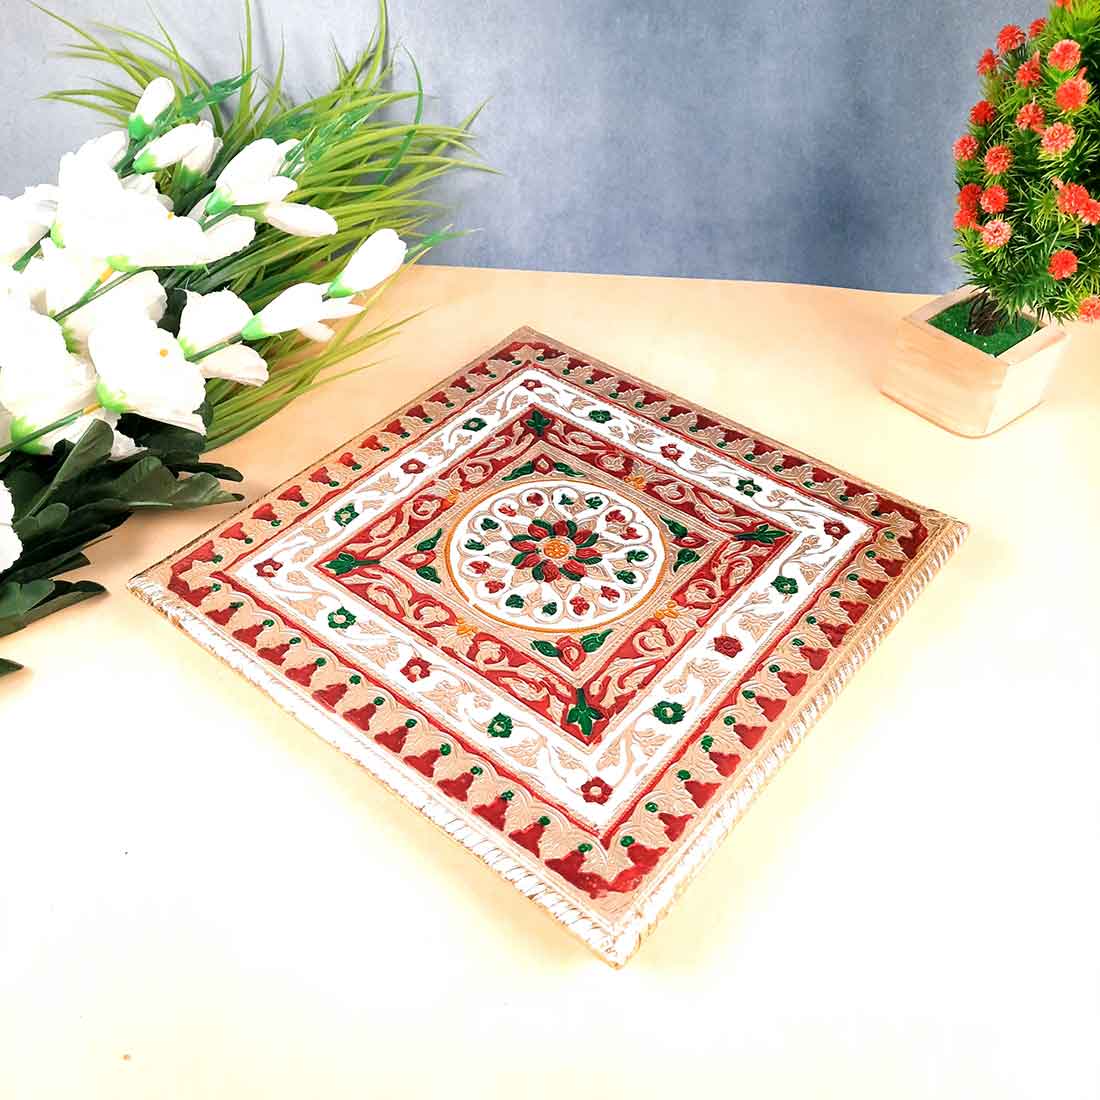 Puja Chowki Set | Wooden Bajot Minakari Design - For Pooja, Festival, Ceremonies & Home Decor (Pack of 4) 6, 8, 10, 12 Inch